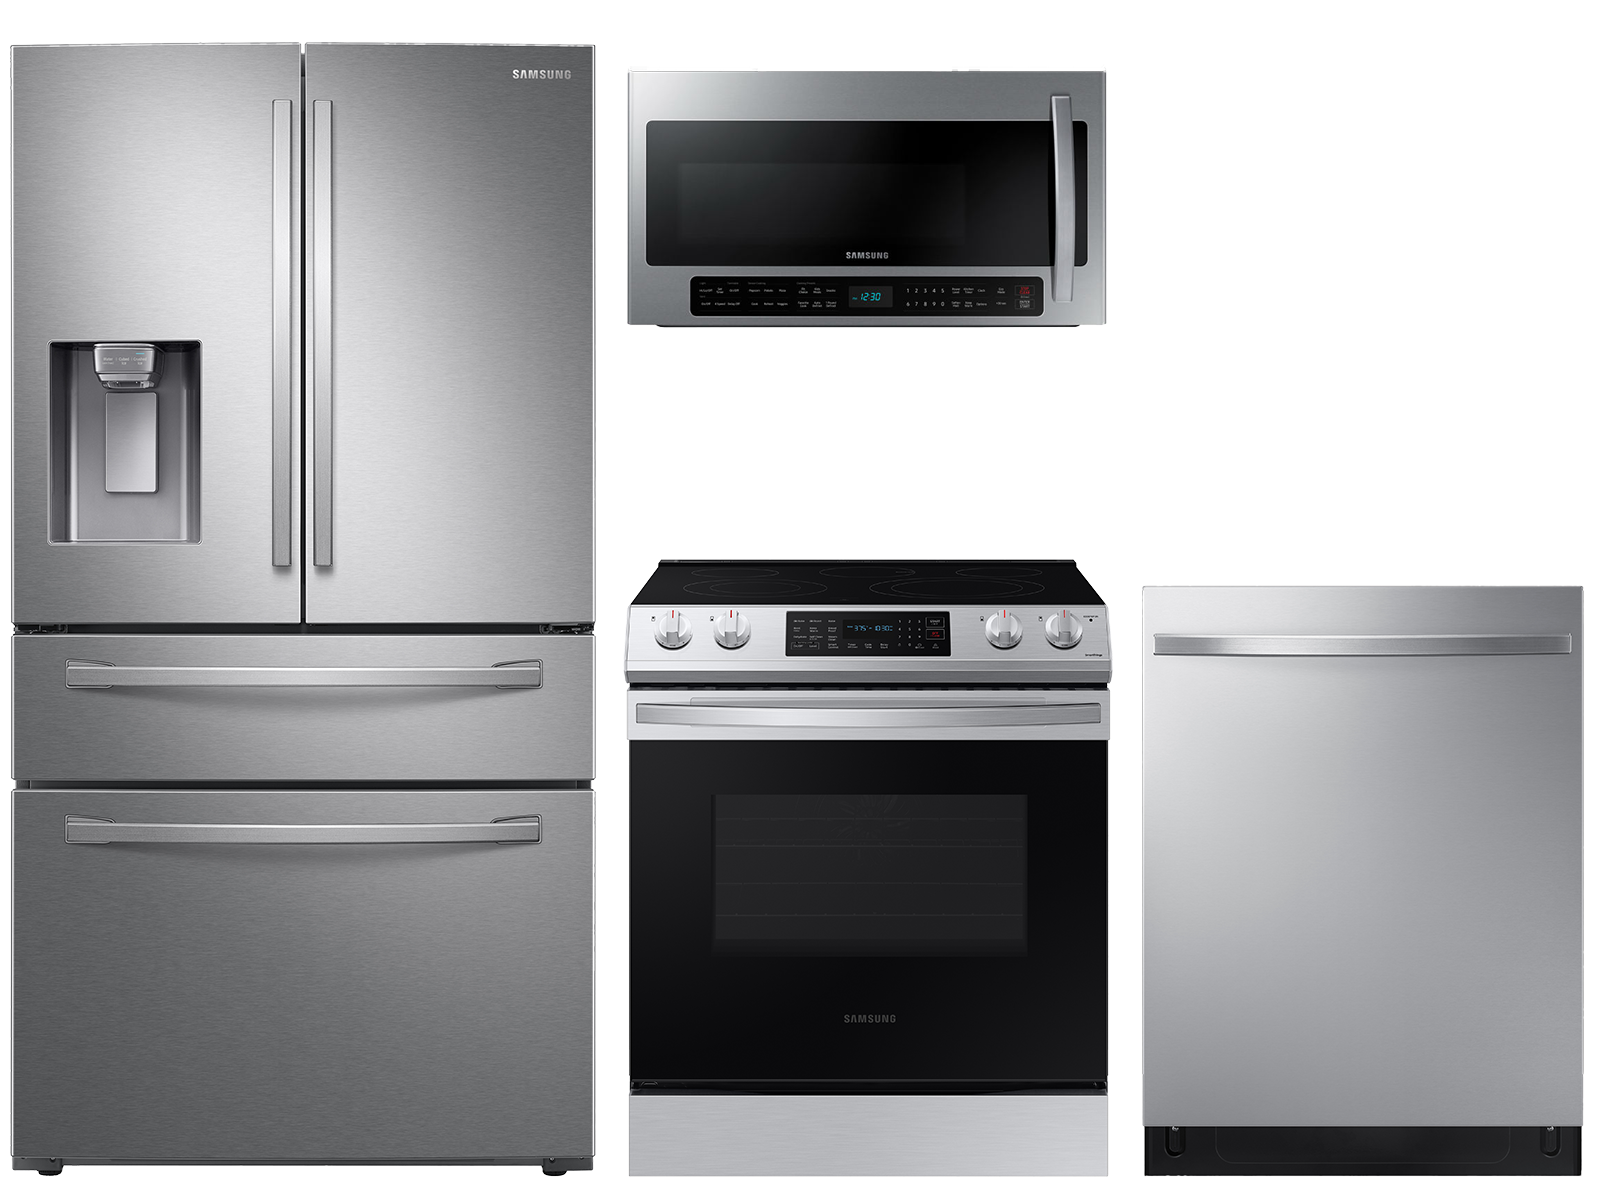 Samsung 23 cu. ft. counter depth 4-door refrigerator, 6.3 cu. ft. electric range, 2.1 cu. ft. microwave and 48 dBA modern-look dishwasher package